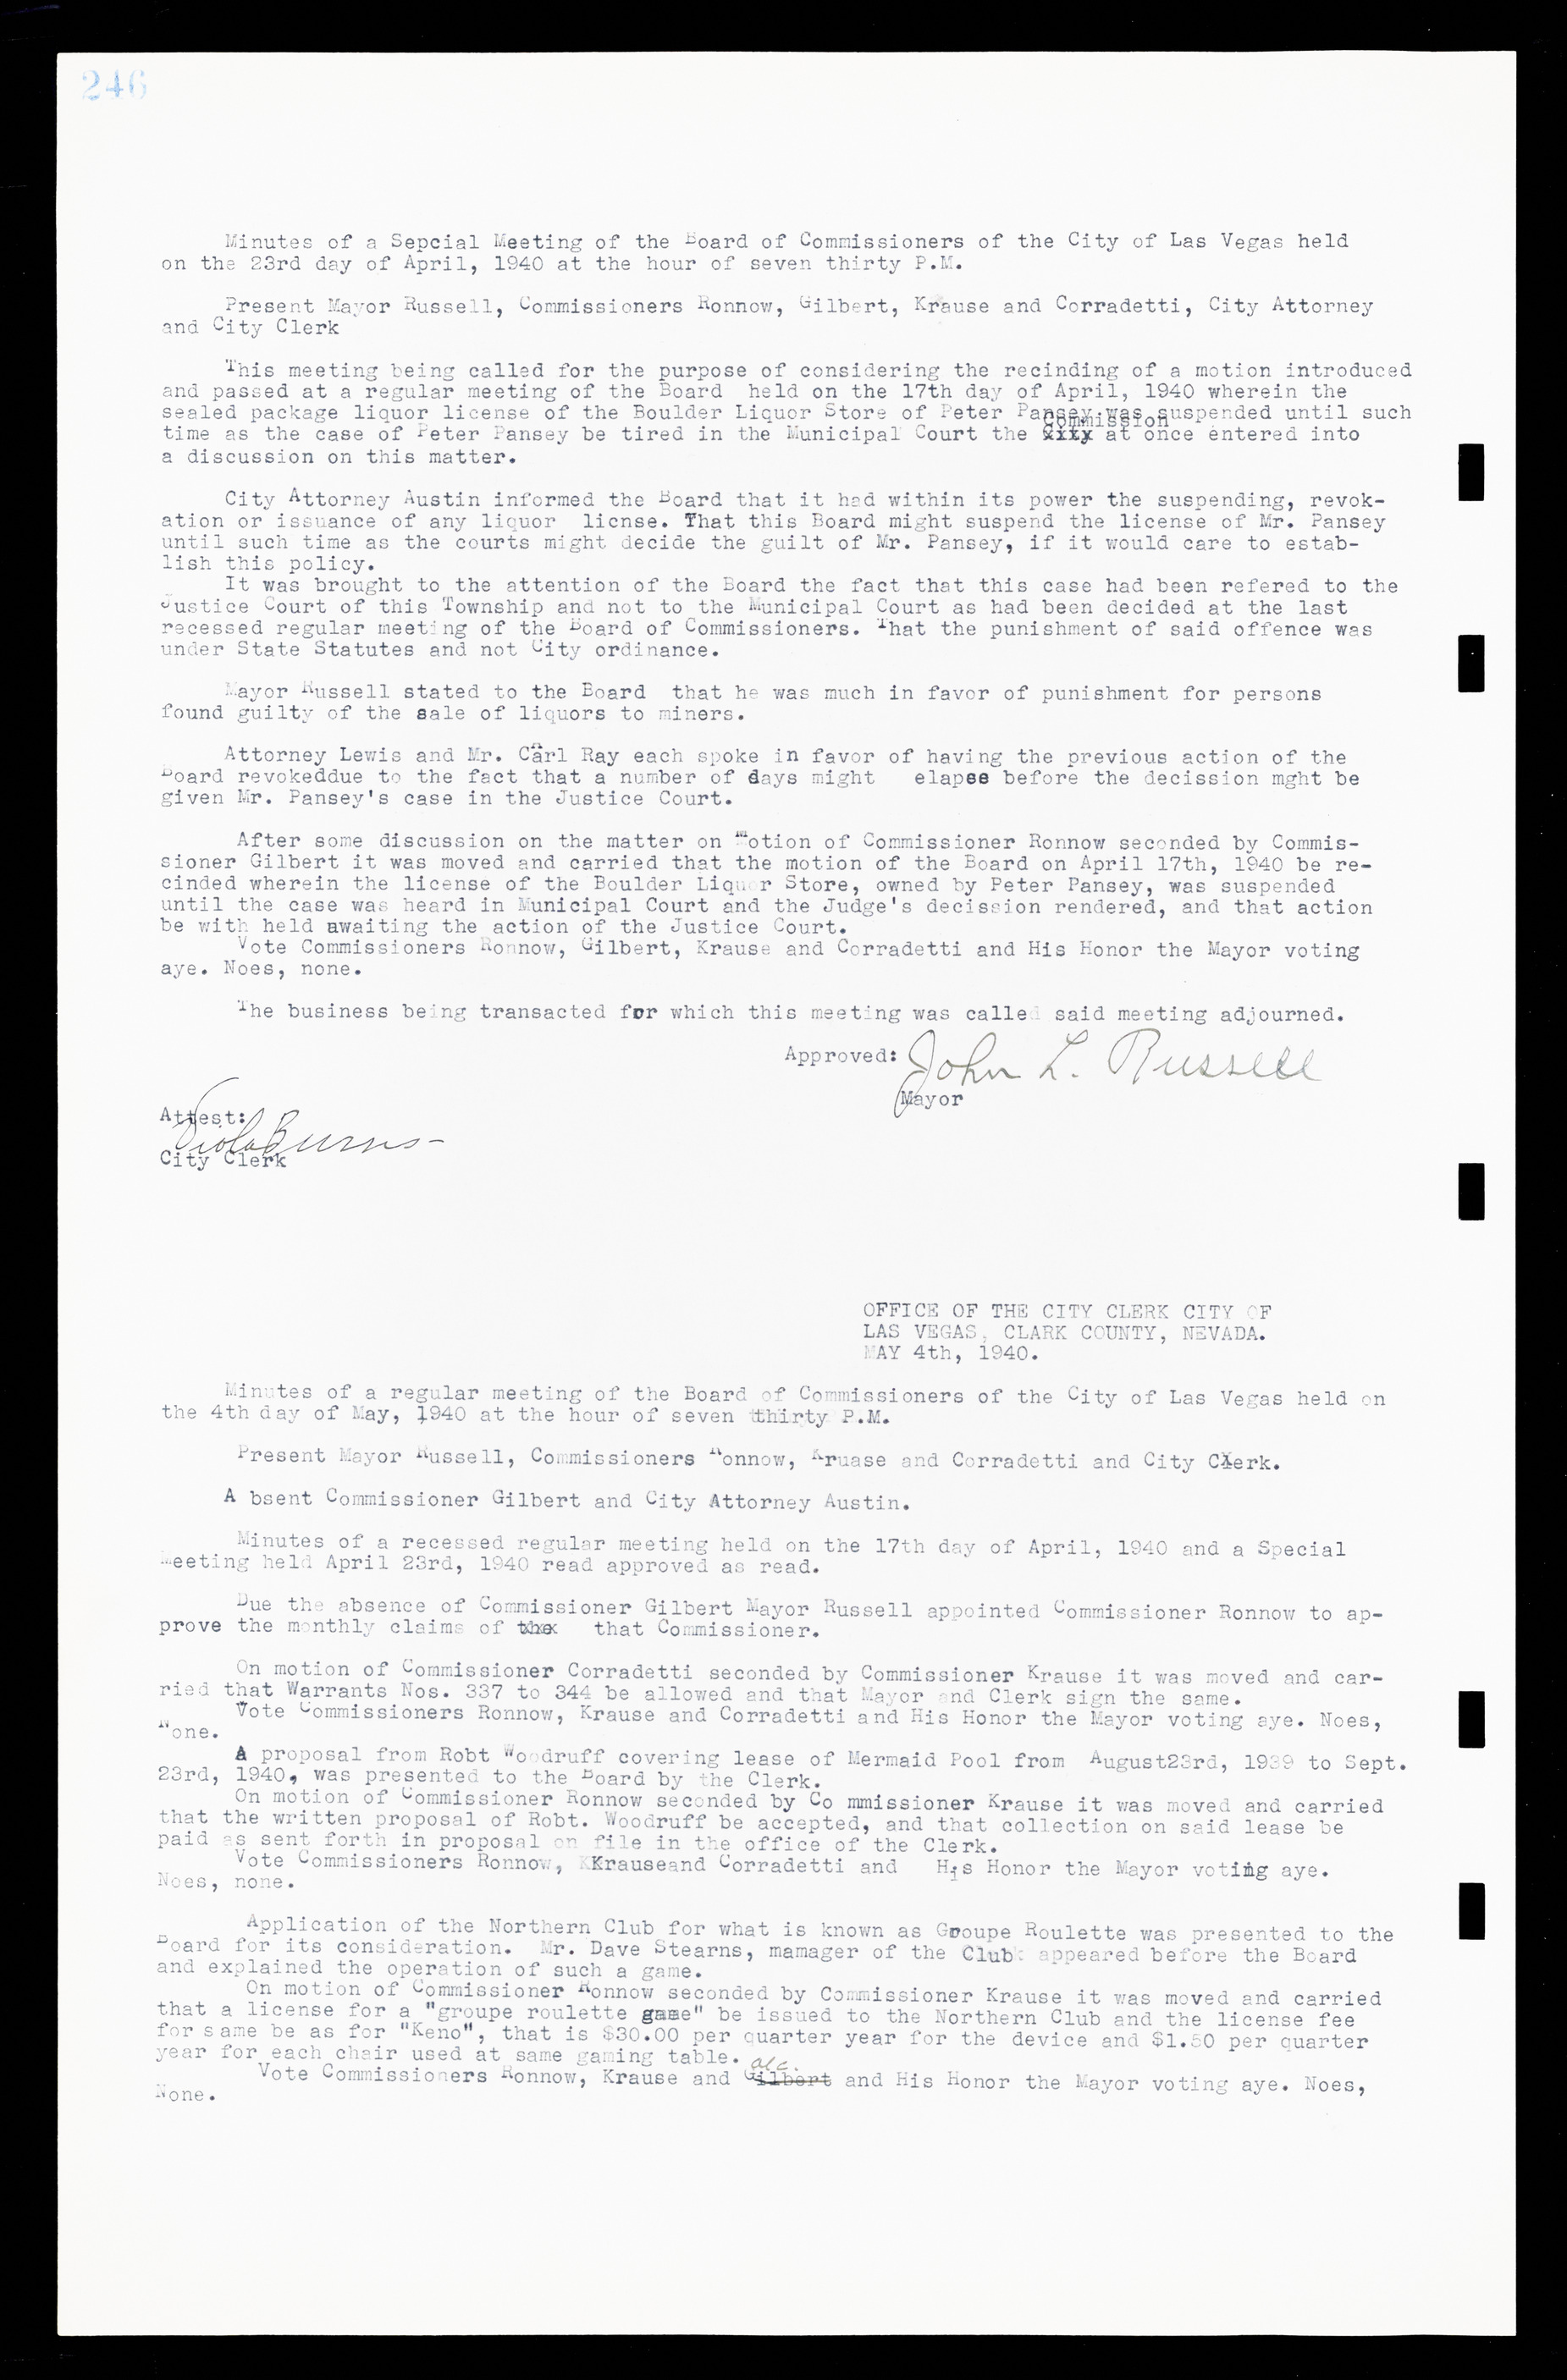 Las Vegas City Commission Minutes, February 17, 1937 to August 4, 1942, lvc000004-266